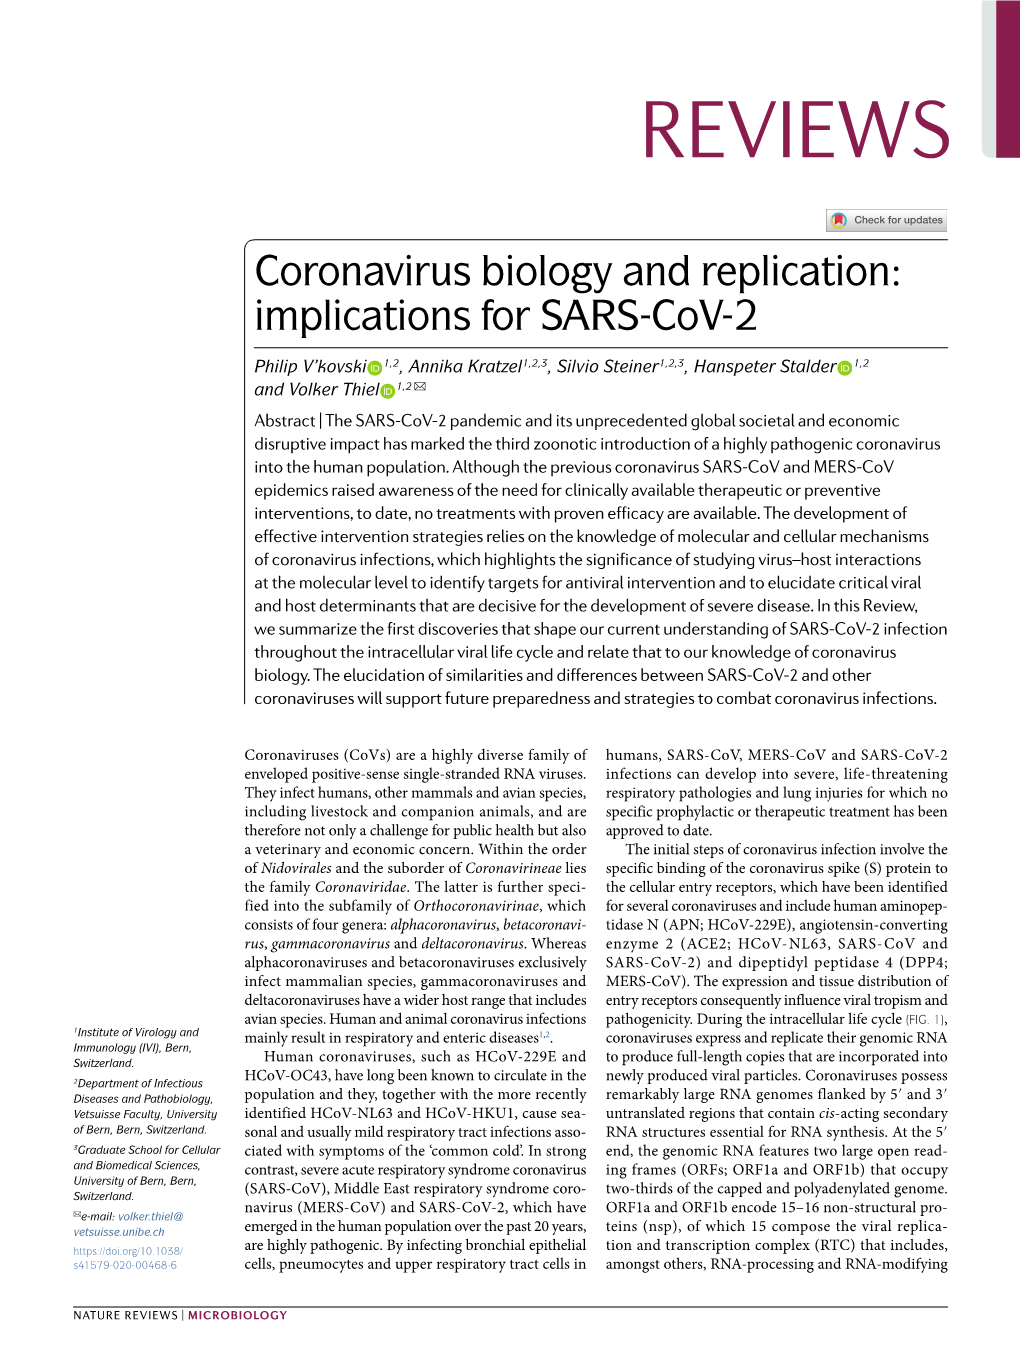 Coronavirus Biology and Replication: Implications for SARS-​Cov-2